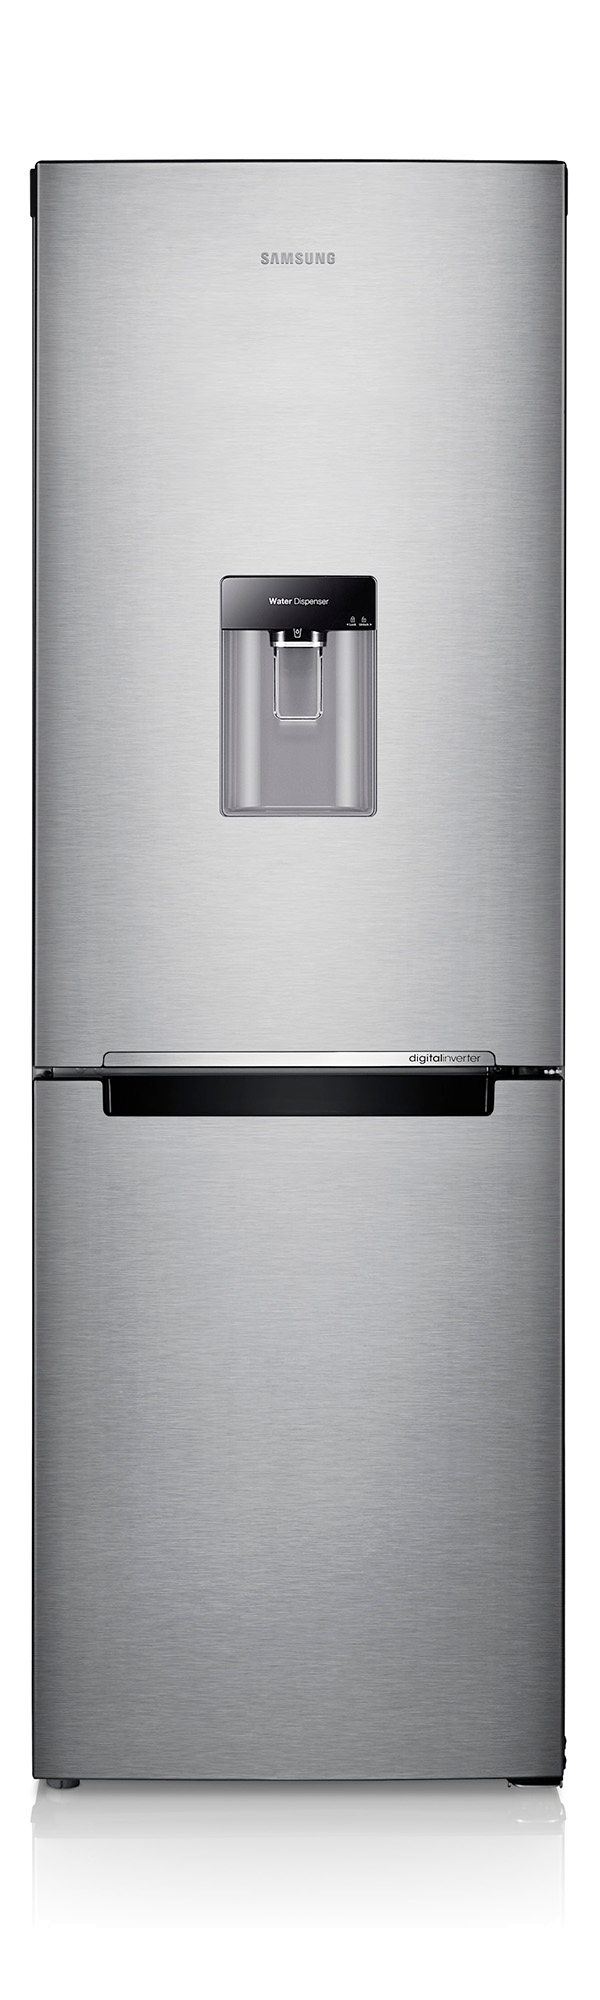 SAMSUNG Rb29 Classic Fridge Freezer With Digital Inverter Technology Platinum Silver 288 L